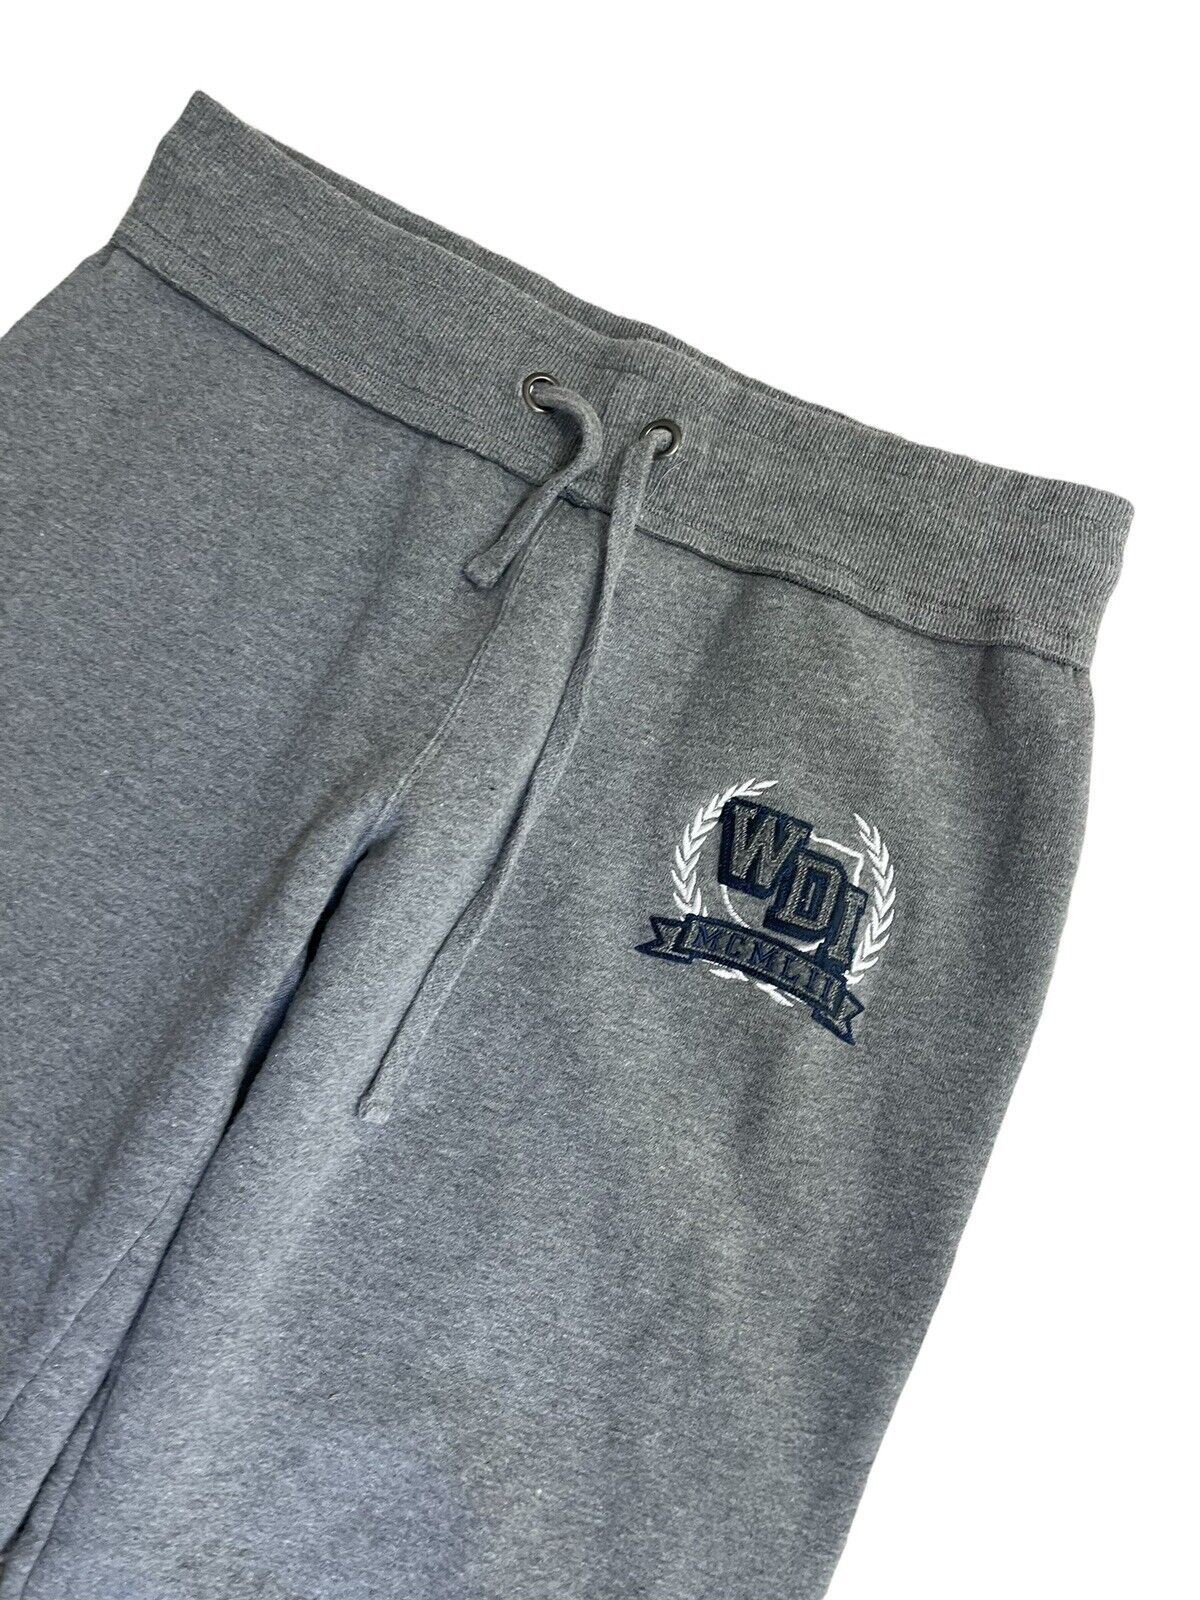 Disney Imagineering WDI Women’s Extra Large XL Sweatpants Logo Gray HTF